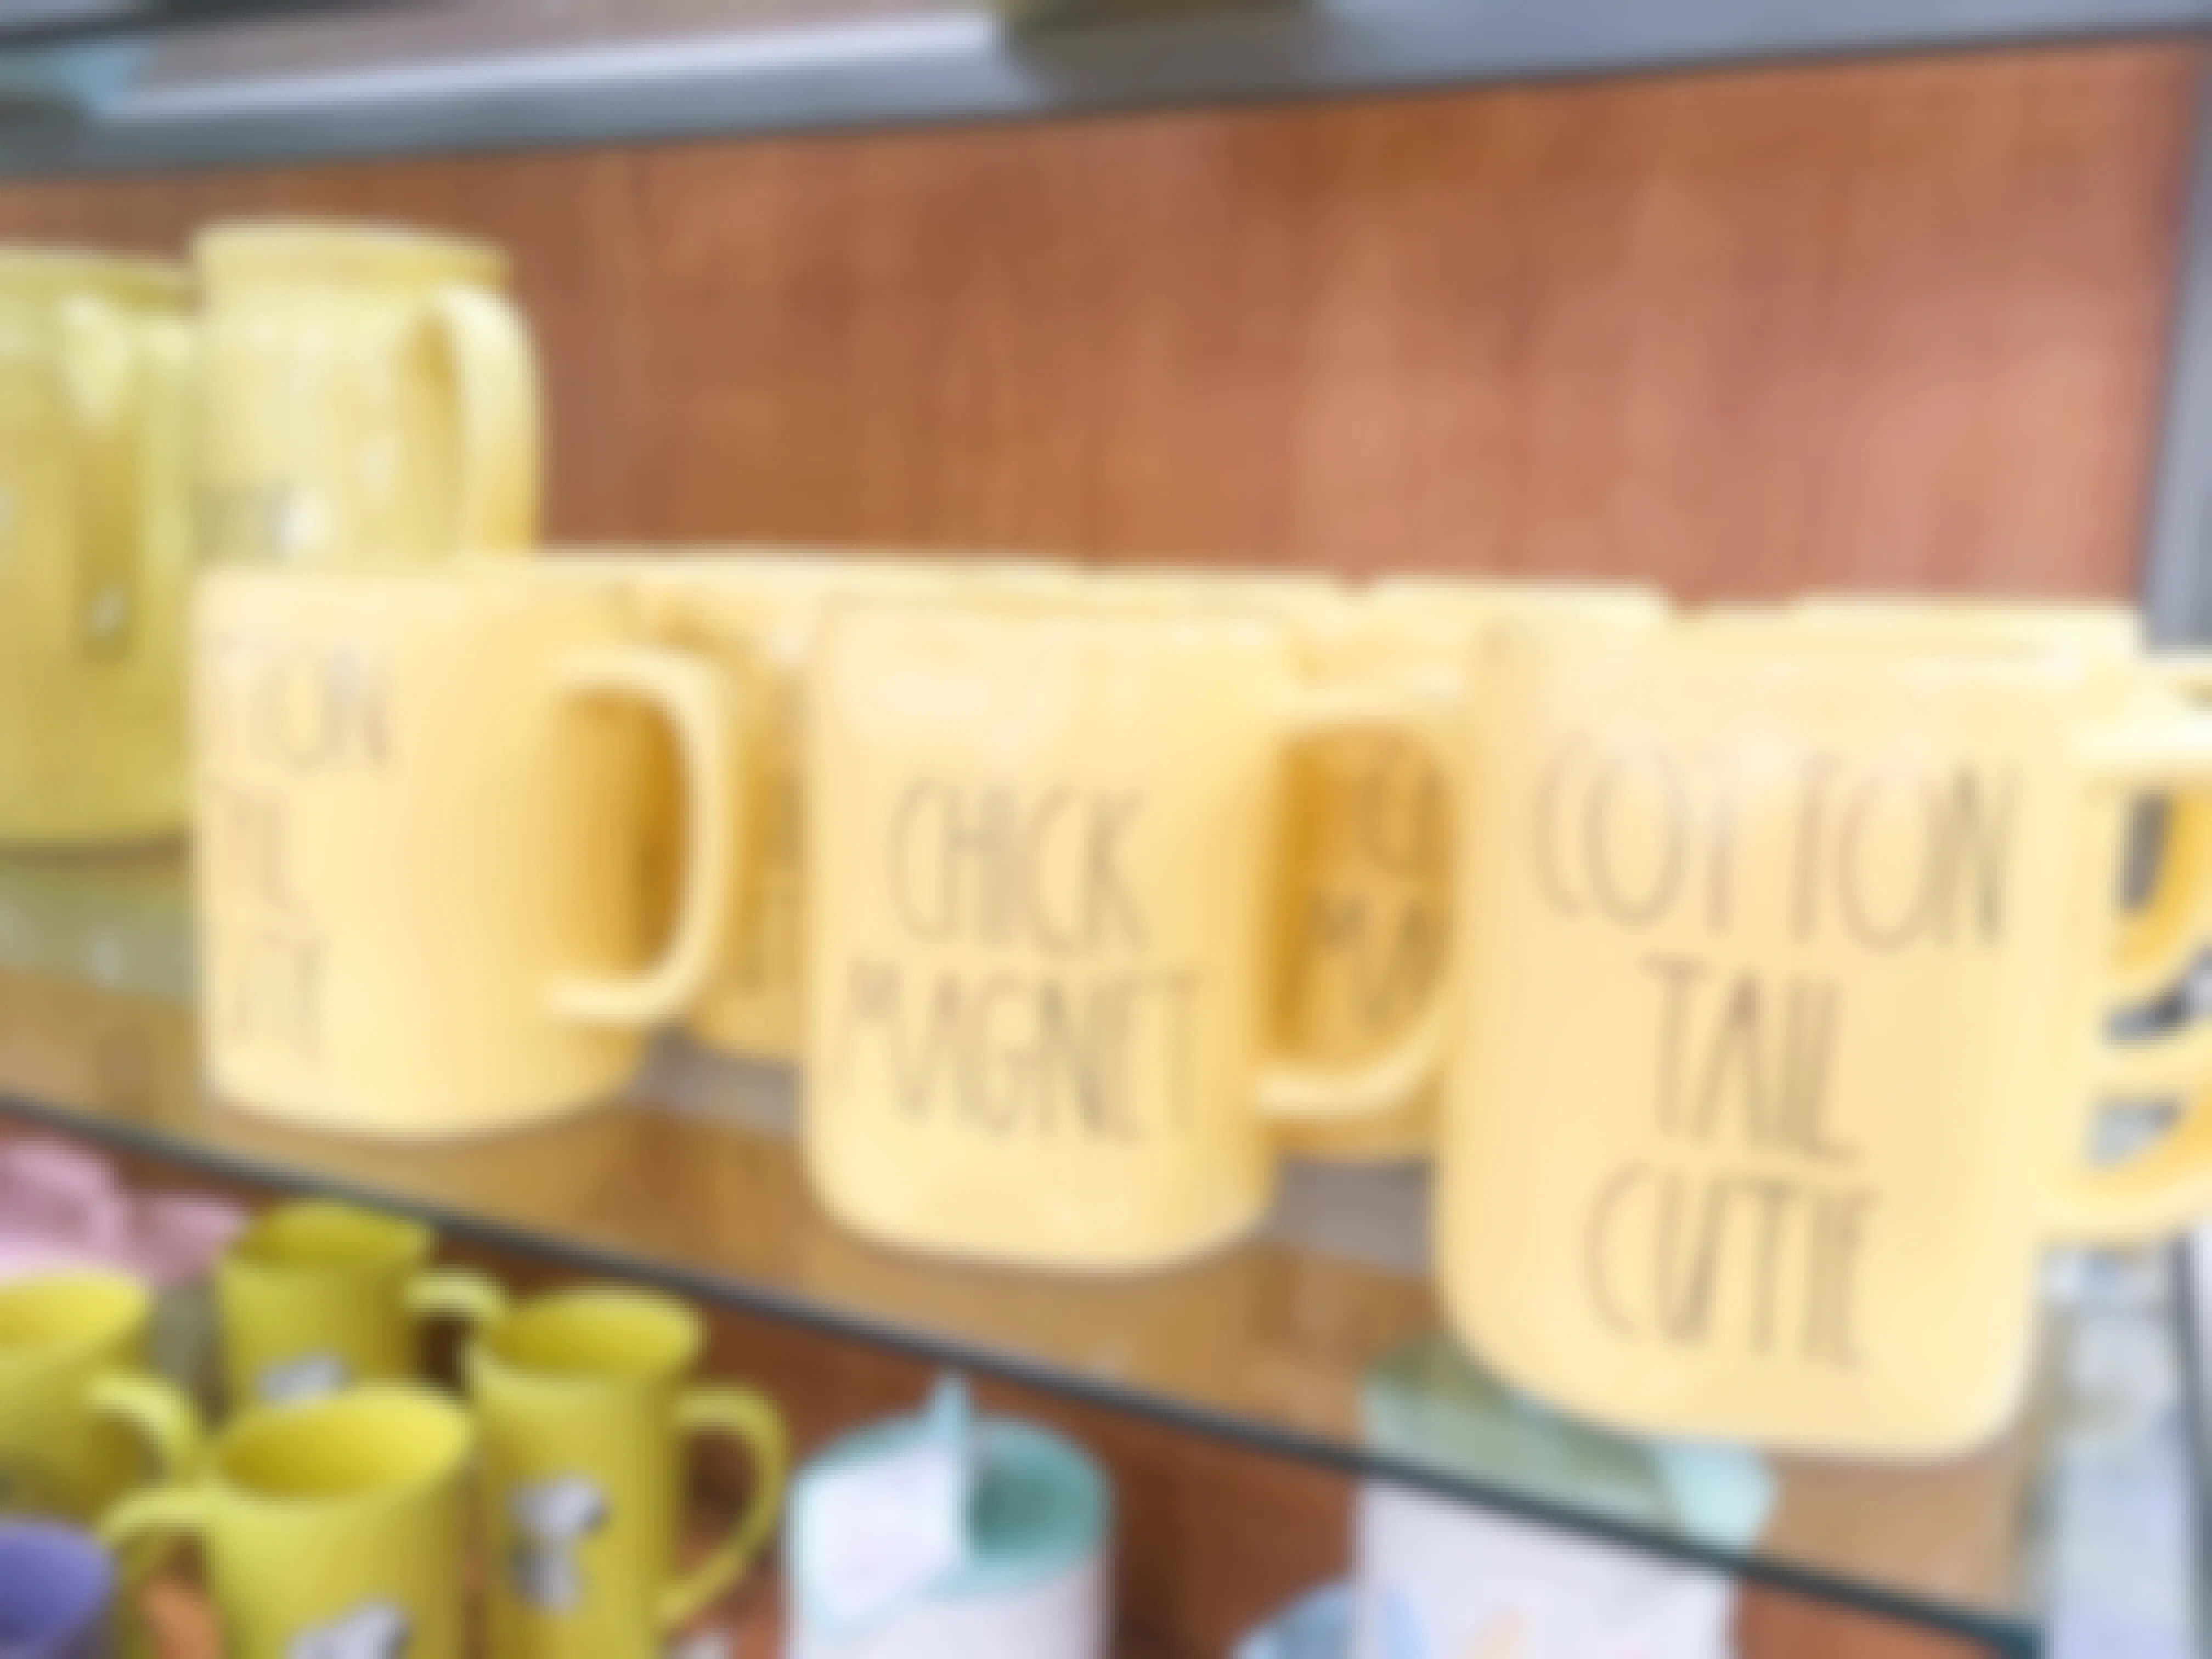 Easter themed Rae Dunn mugs on a shelf in TJ Maxx.